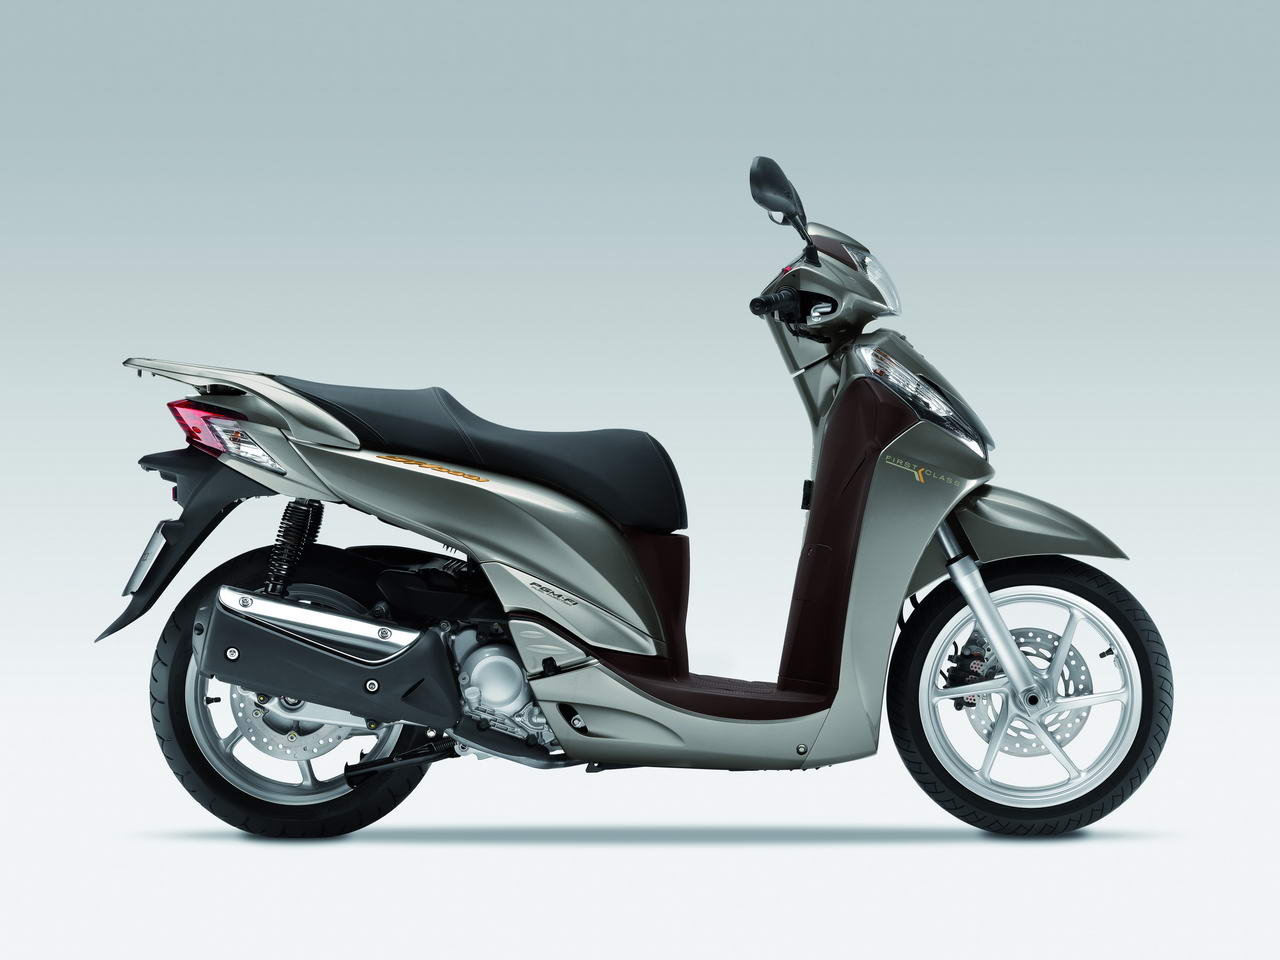 Listino Honda SH300i Sporty ABS Scooter 150-300 - image 14722_honda-sh300i on https://moto.motori.net